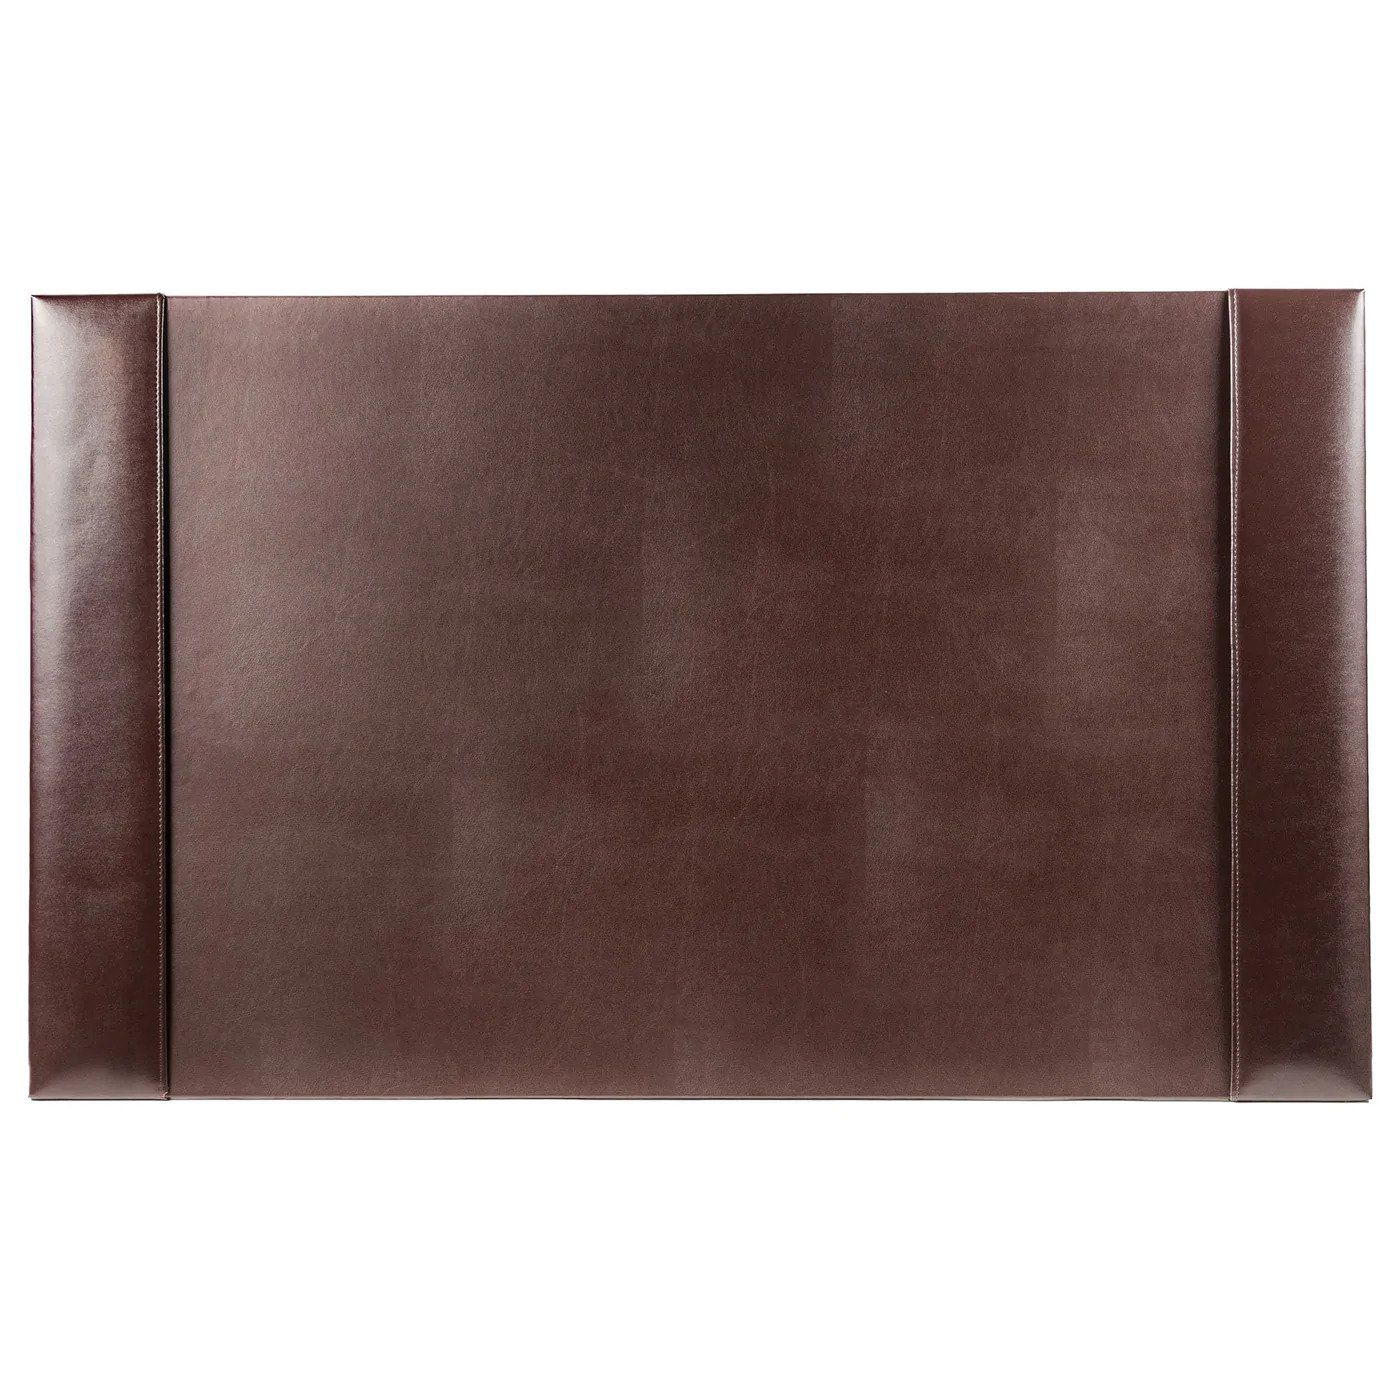 Brown 30 X 18 Econo-line Leather Desk Pad